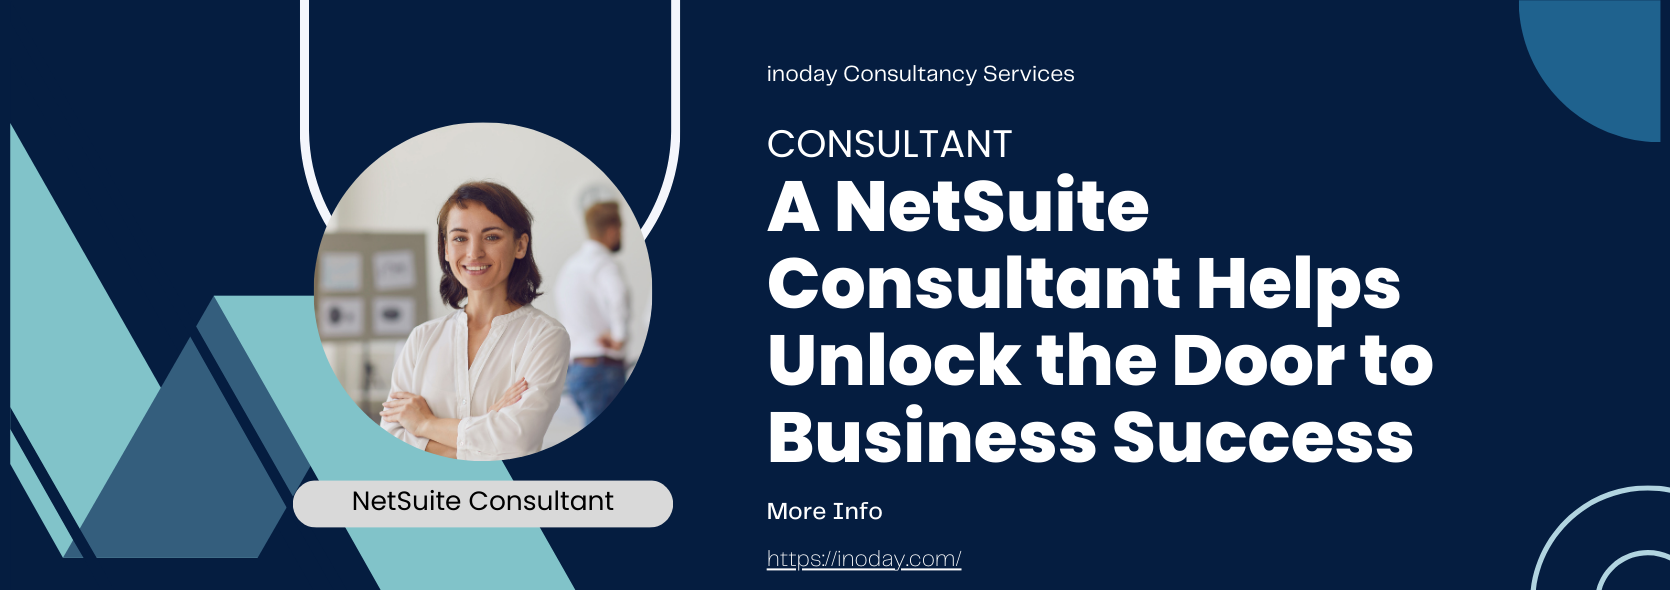 A NetSuite Consultant Helps Unlock the Door to Business Success - Networkblogworld.com